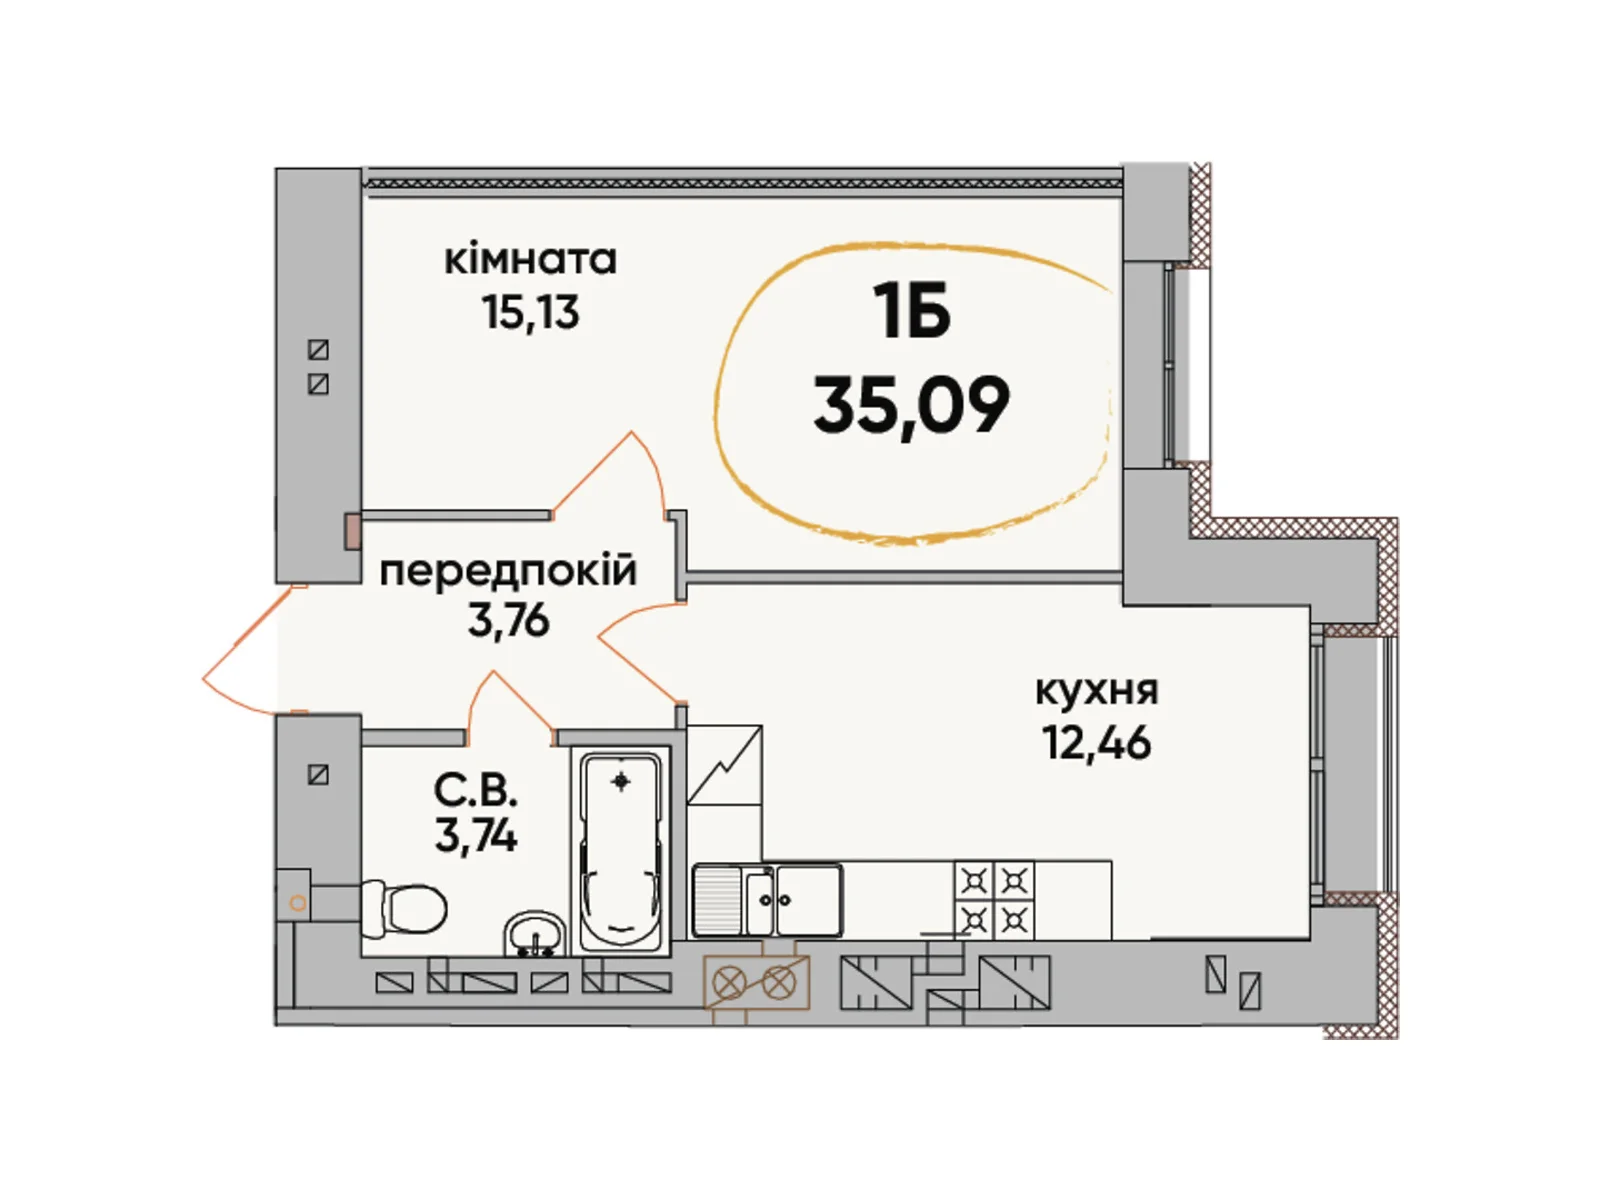 Продается 1-комнатная квартира 35.09 кв. м в Буче, ул. Ивана Кожедуба, 8 - фото 1